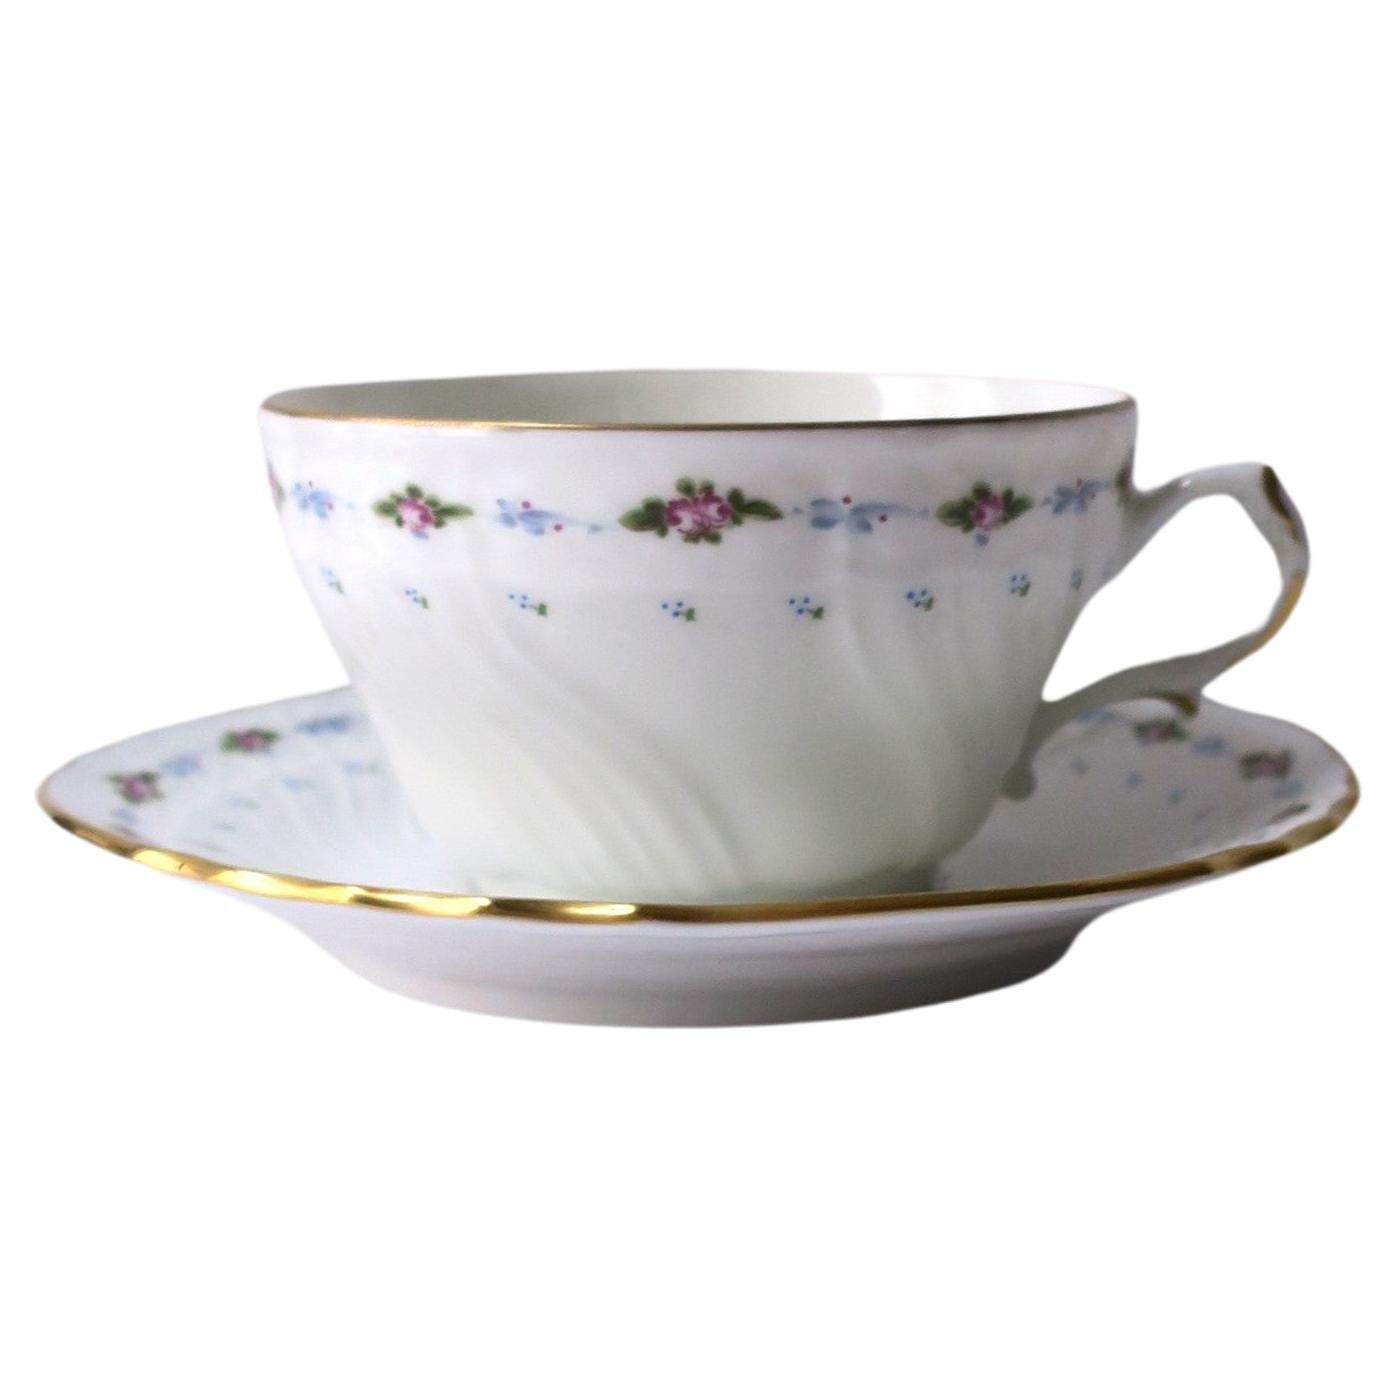 Richard Ginori Italian Porcelain Coffee or Tea Cup & Saucer, 1991